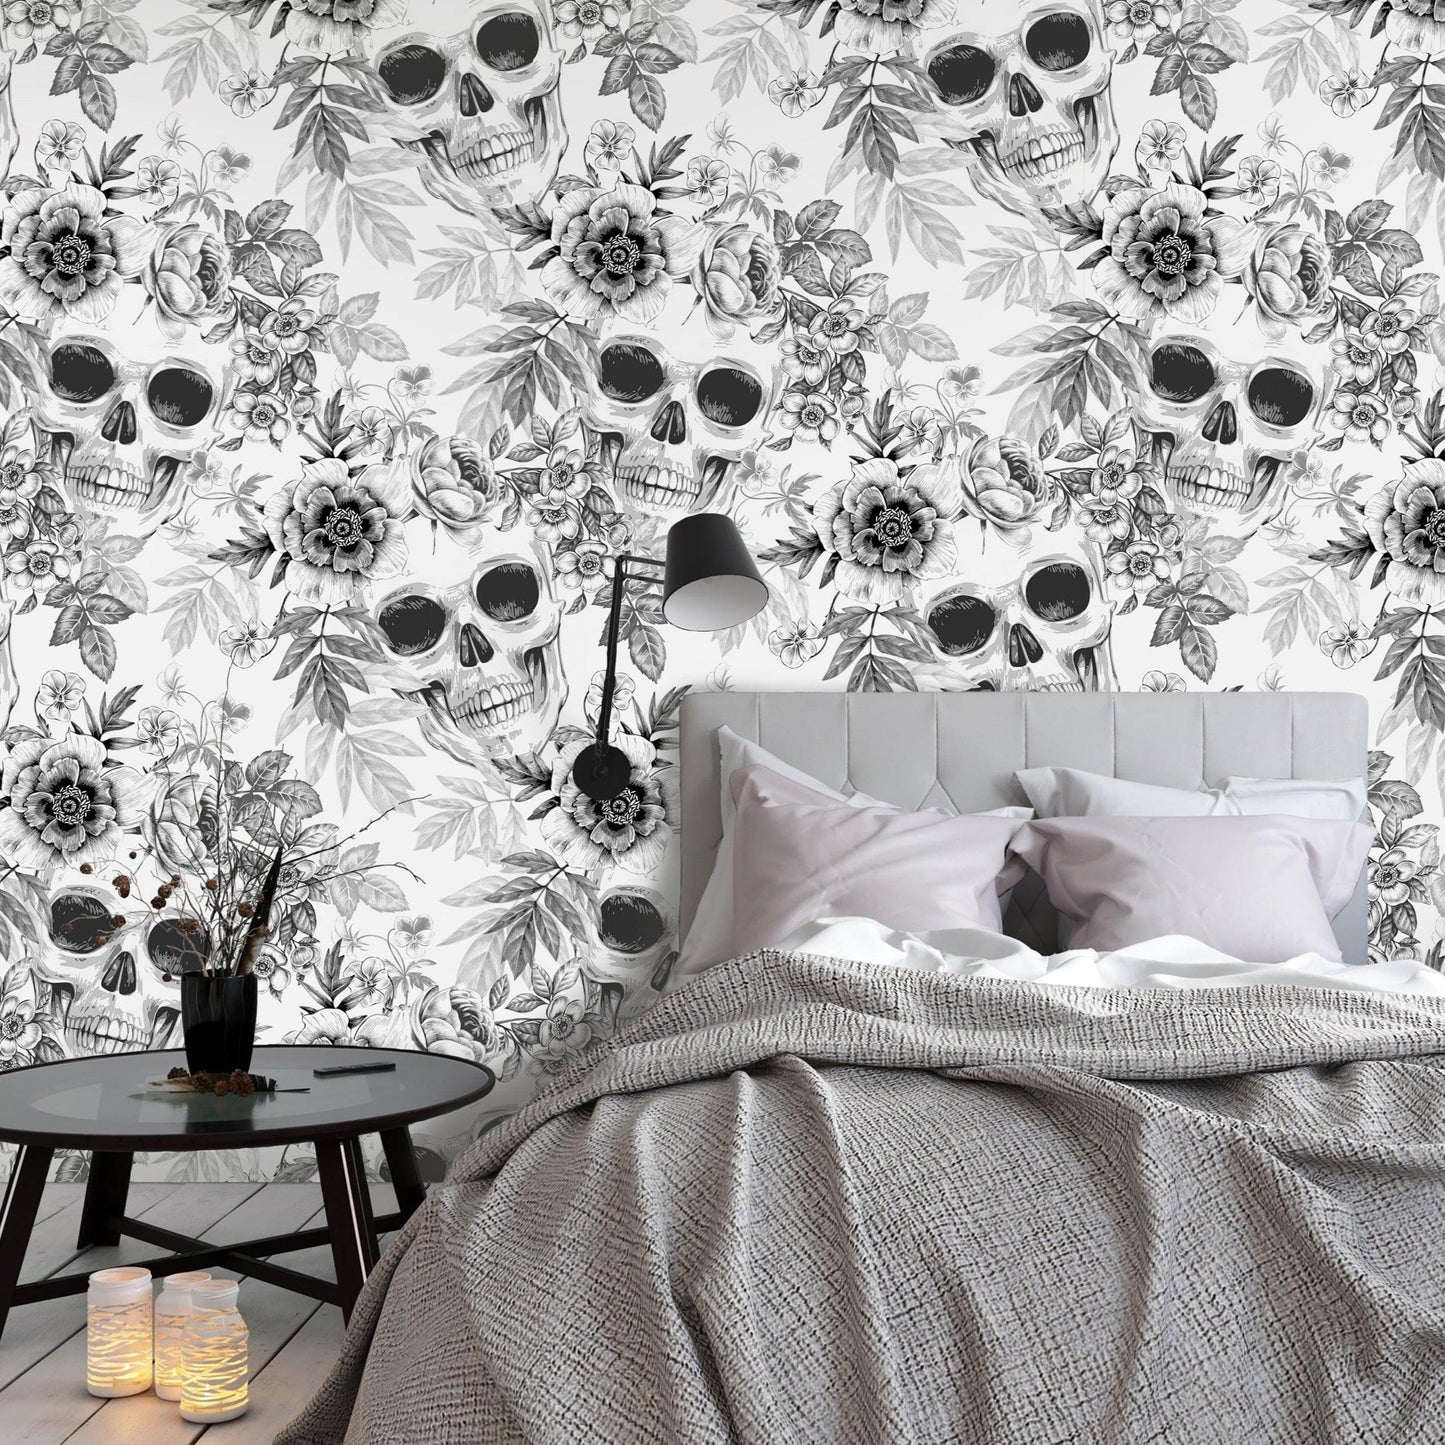 Black and White Skulls Flowers Self Adhesive Wallpaper Black and White Skulls Flowers Self Adhesive Wallpaper Black and White Skulls Flowers Self Adhesive Wallpaper 